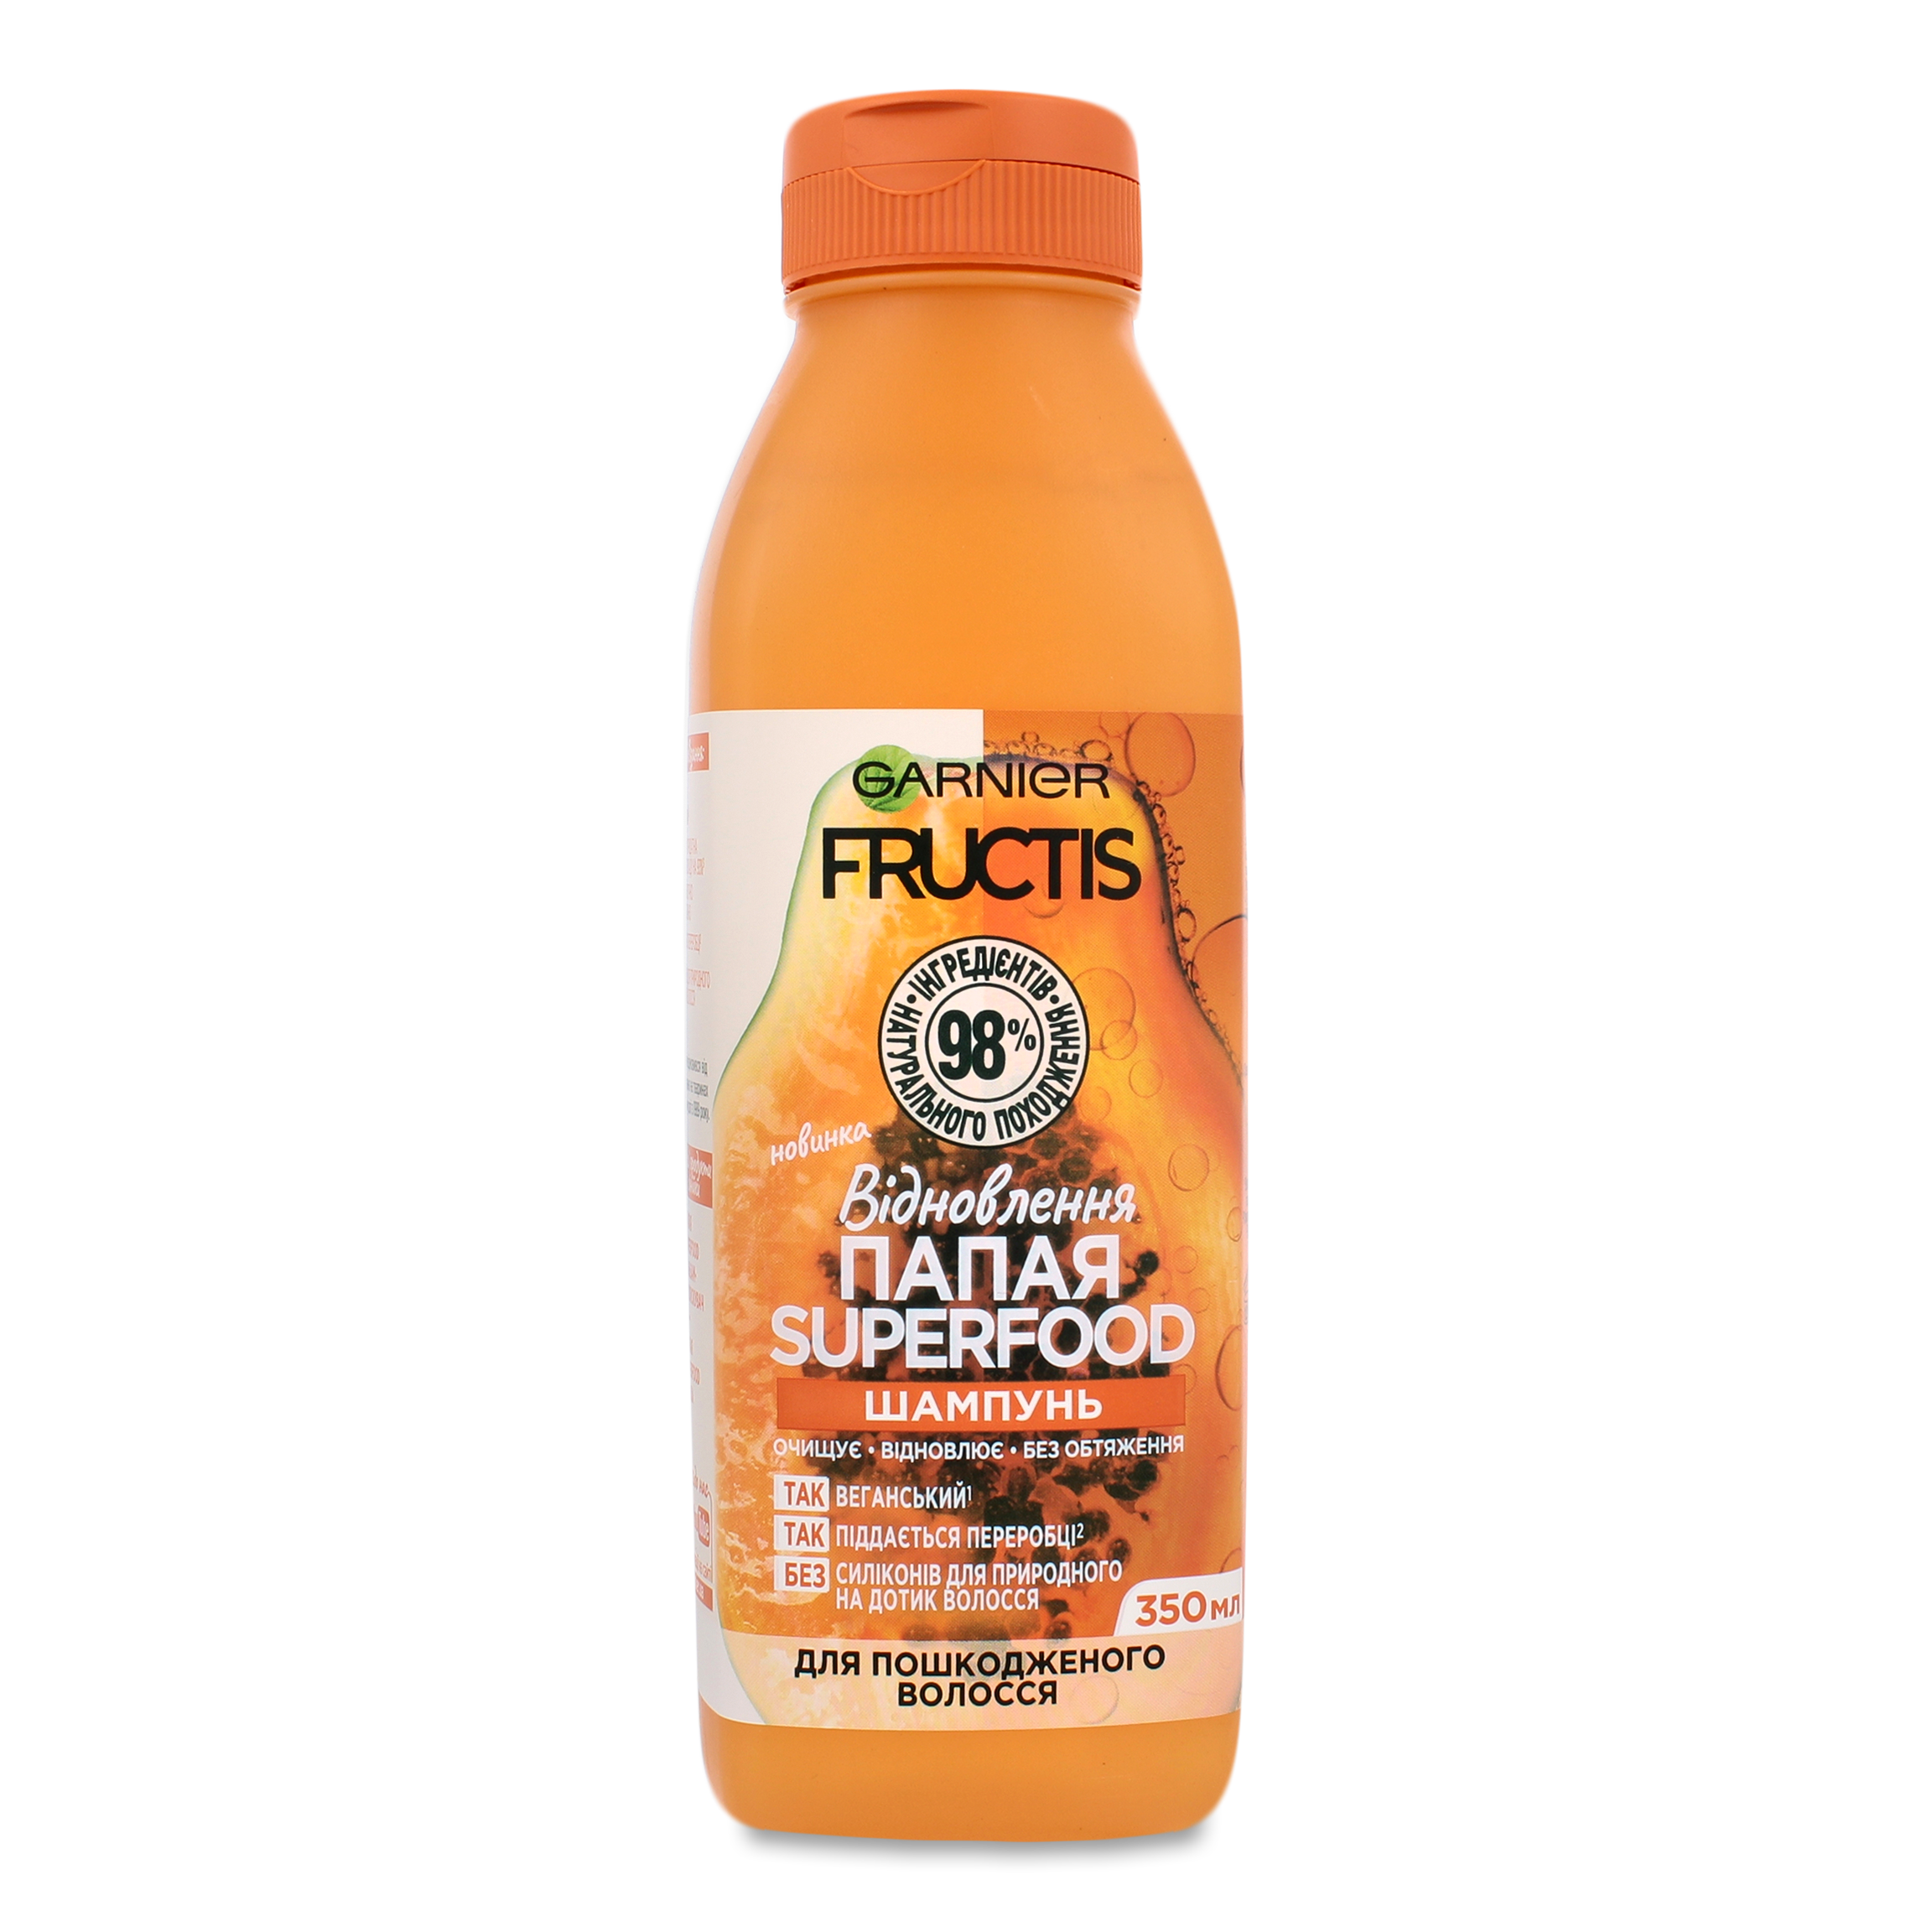 Garnier Fructis Papaya Superfood Recovery For Damaged Hair Shampoo 350ml